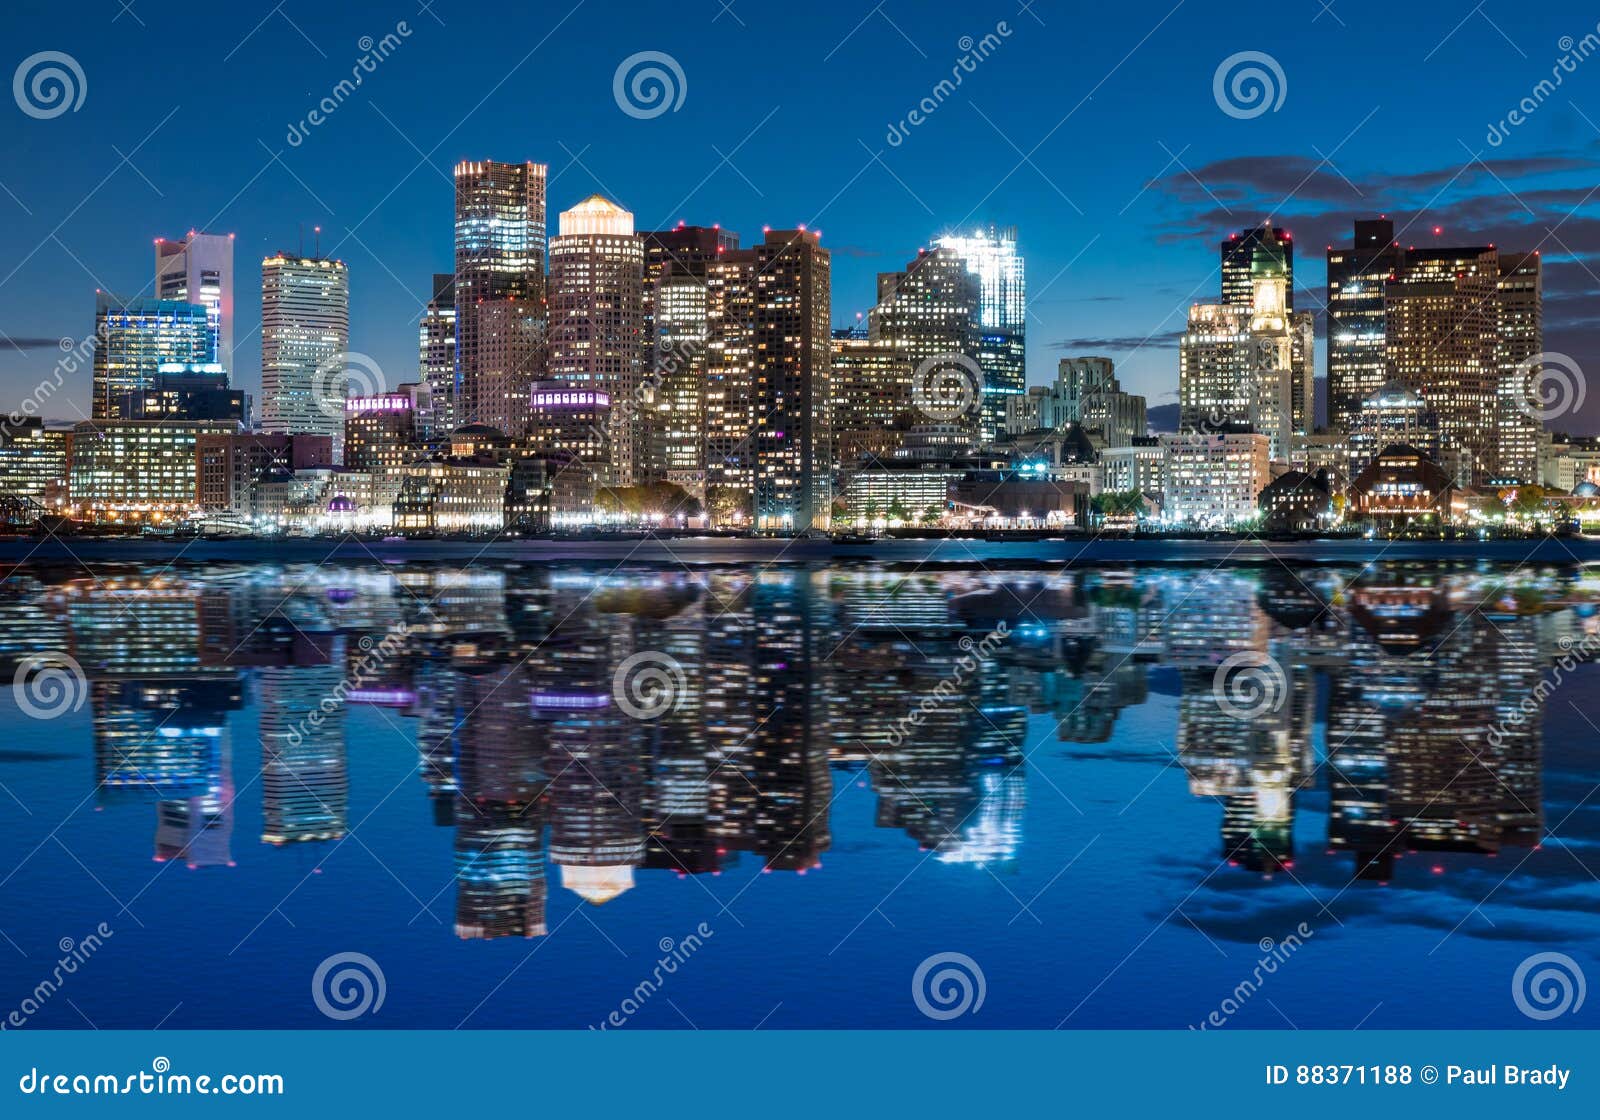 Skyline de Boston na noite. Skyline de Boston no crepúsculo através do porto